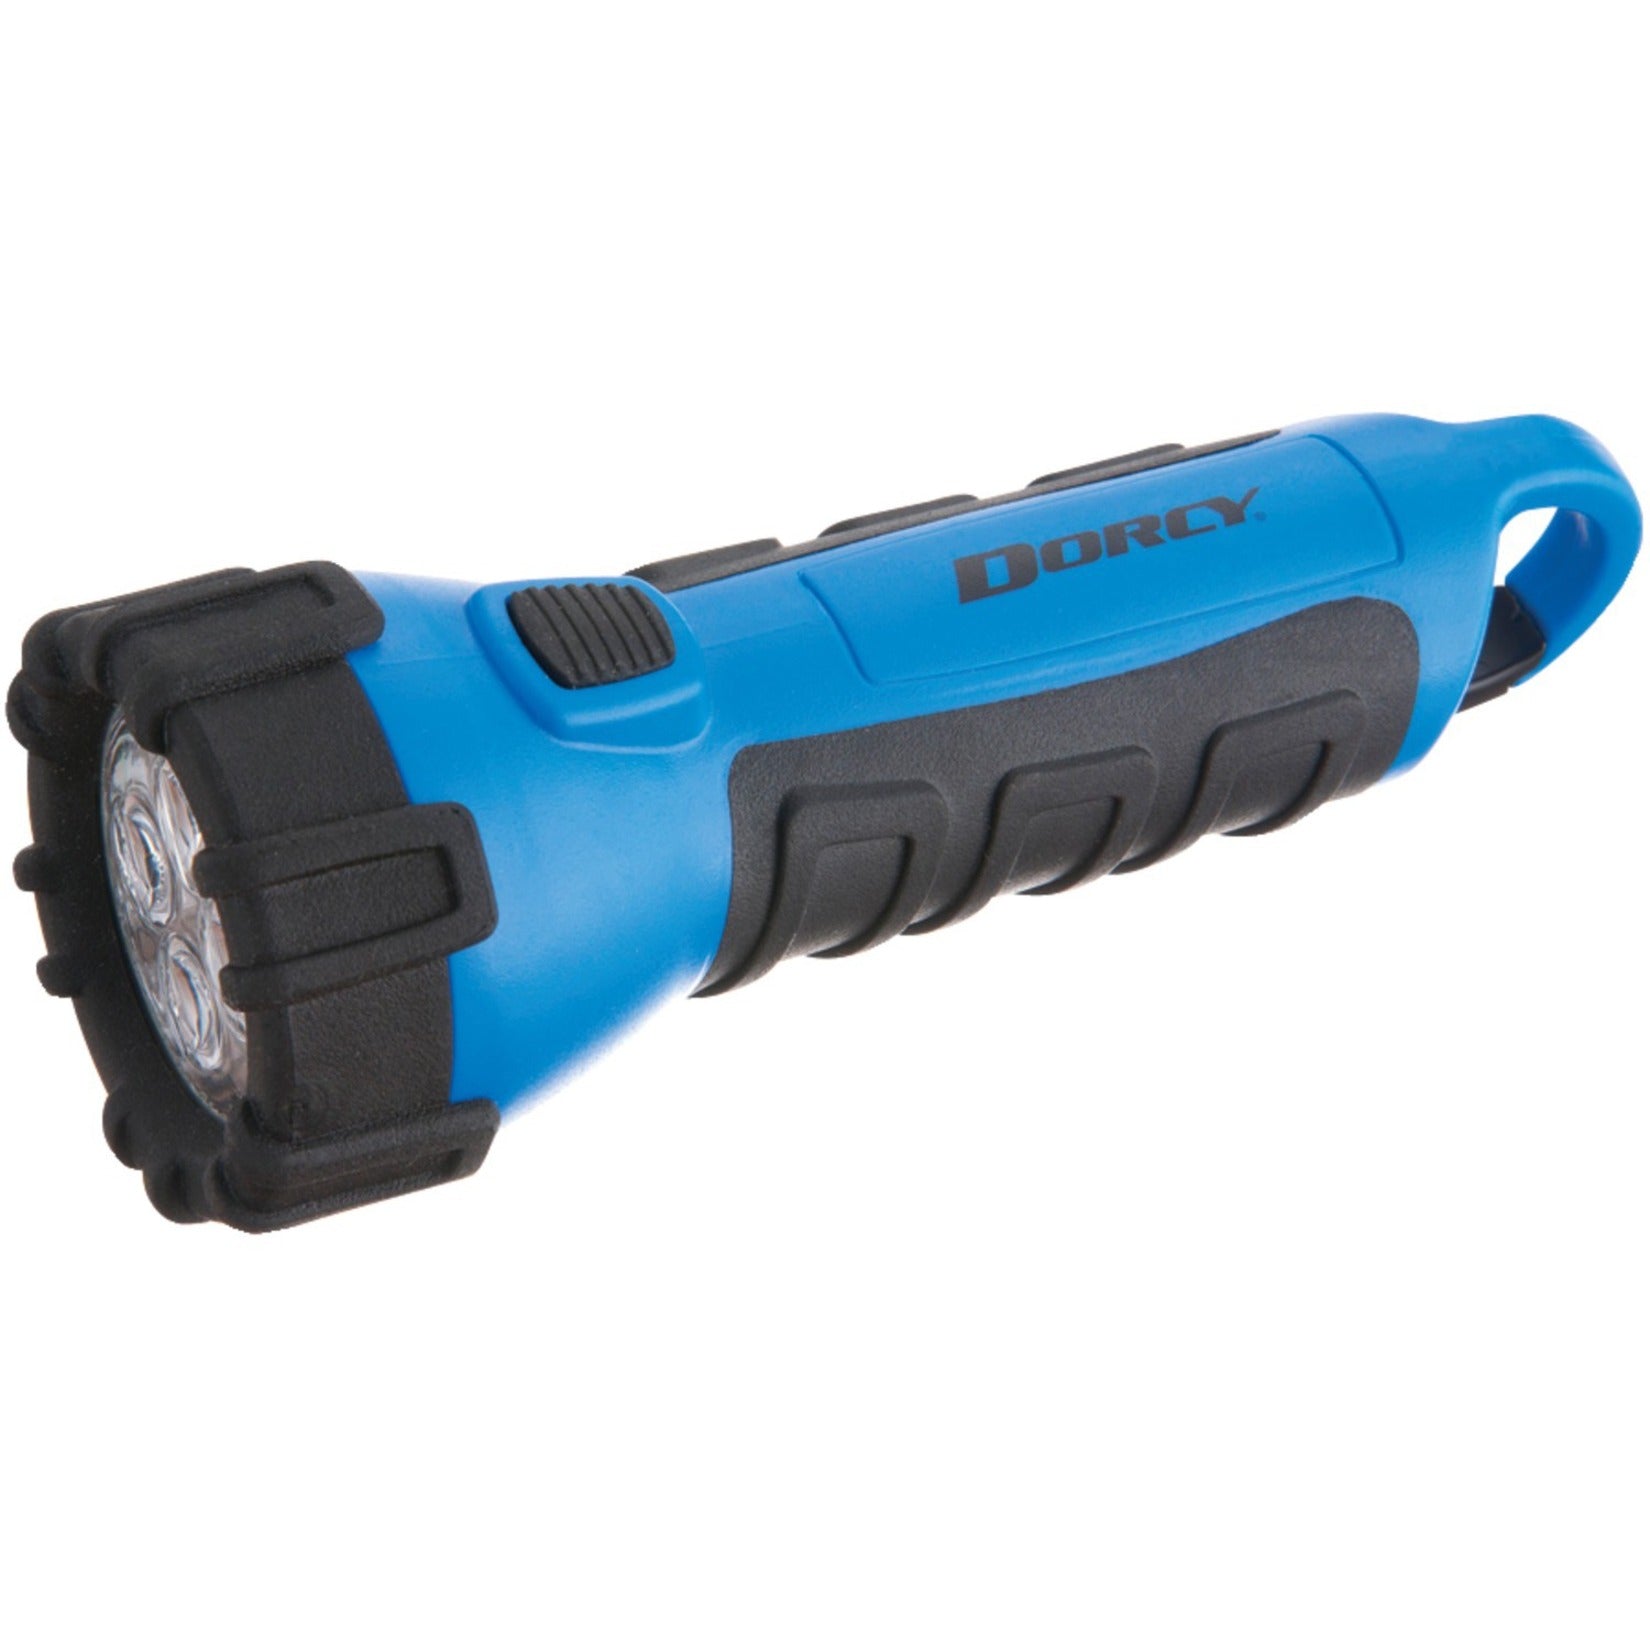 Dorcy 41-2511 Flashlight, 4-LED Floating, Shock Absorbing, Water Proof, Carabiner Clip, Super Bright